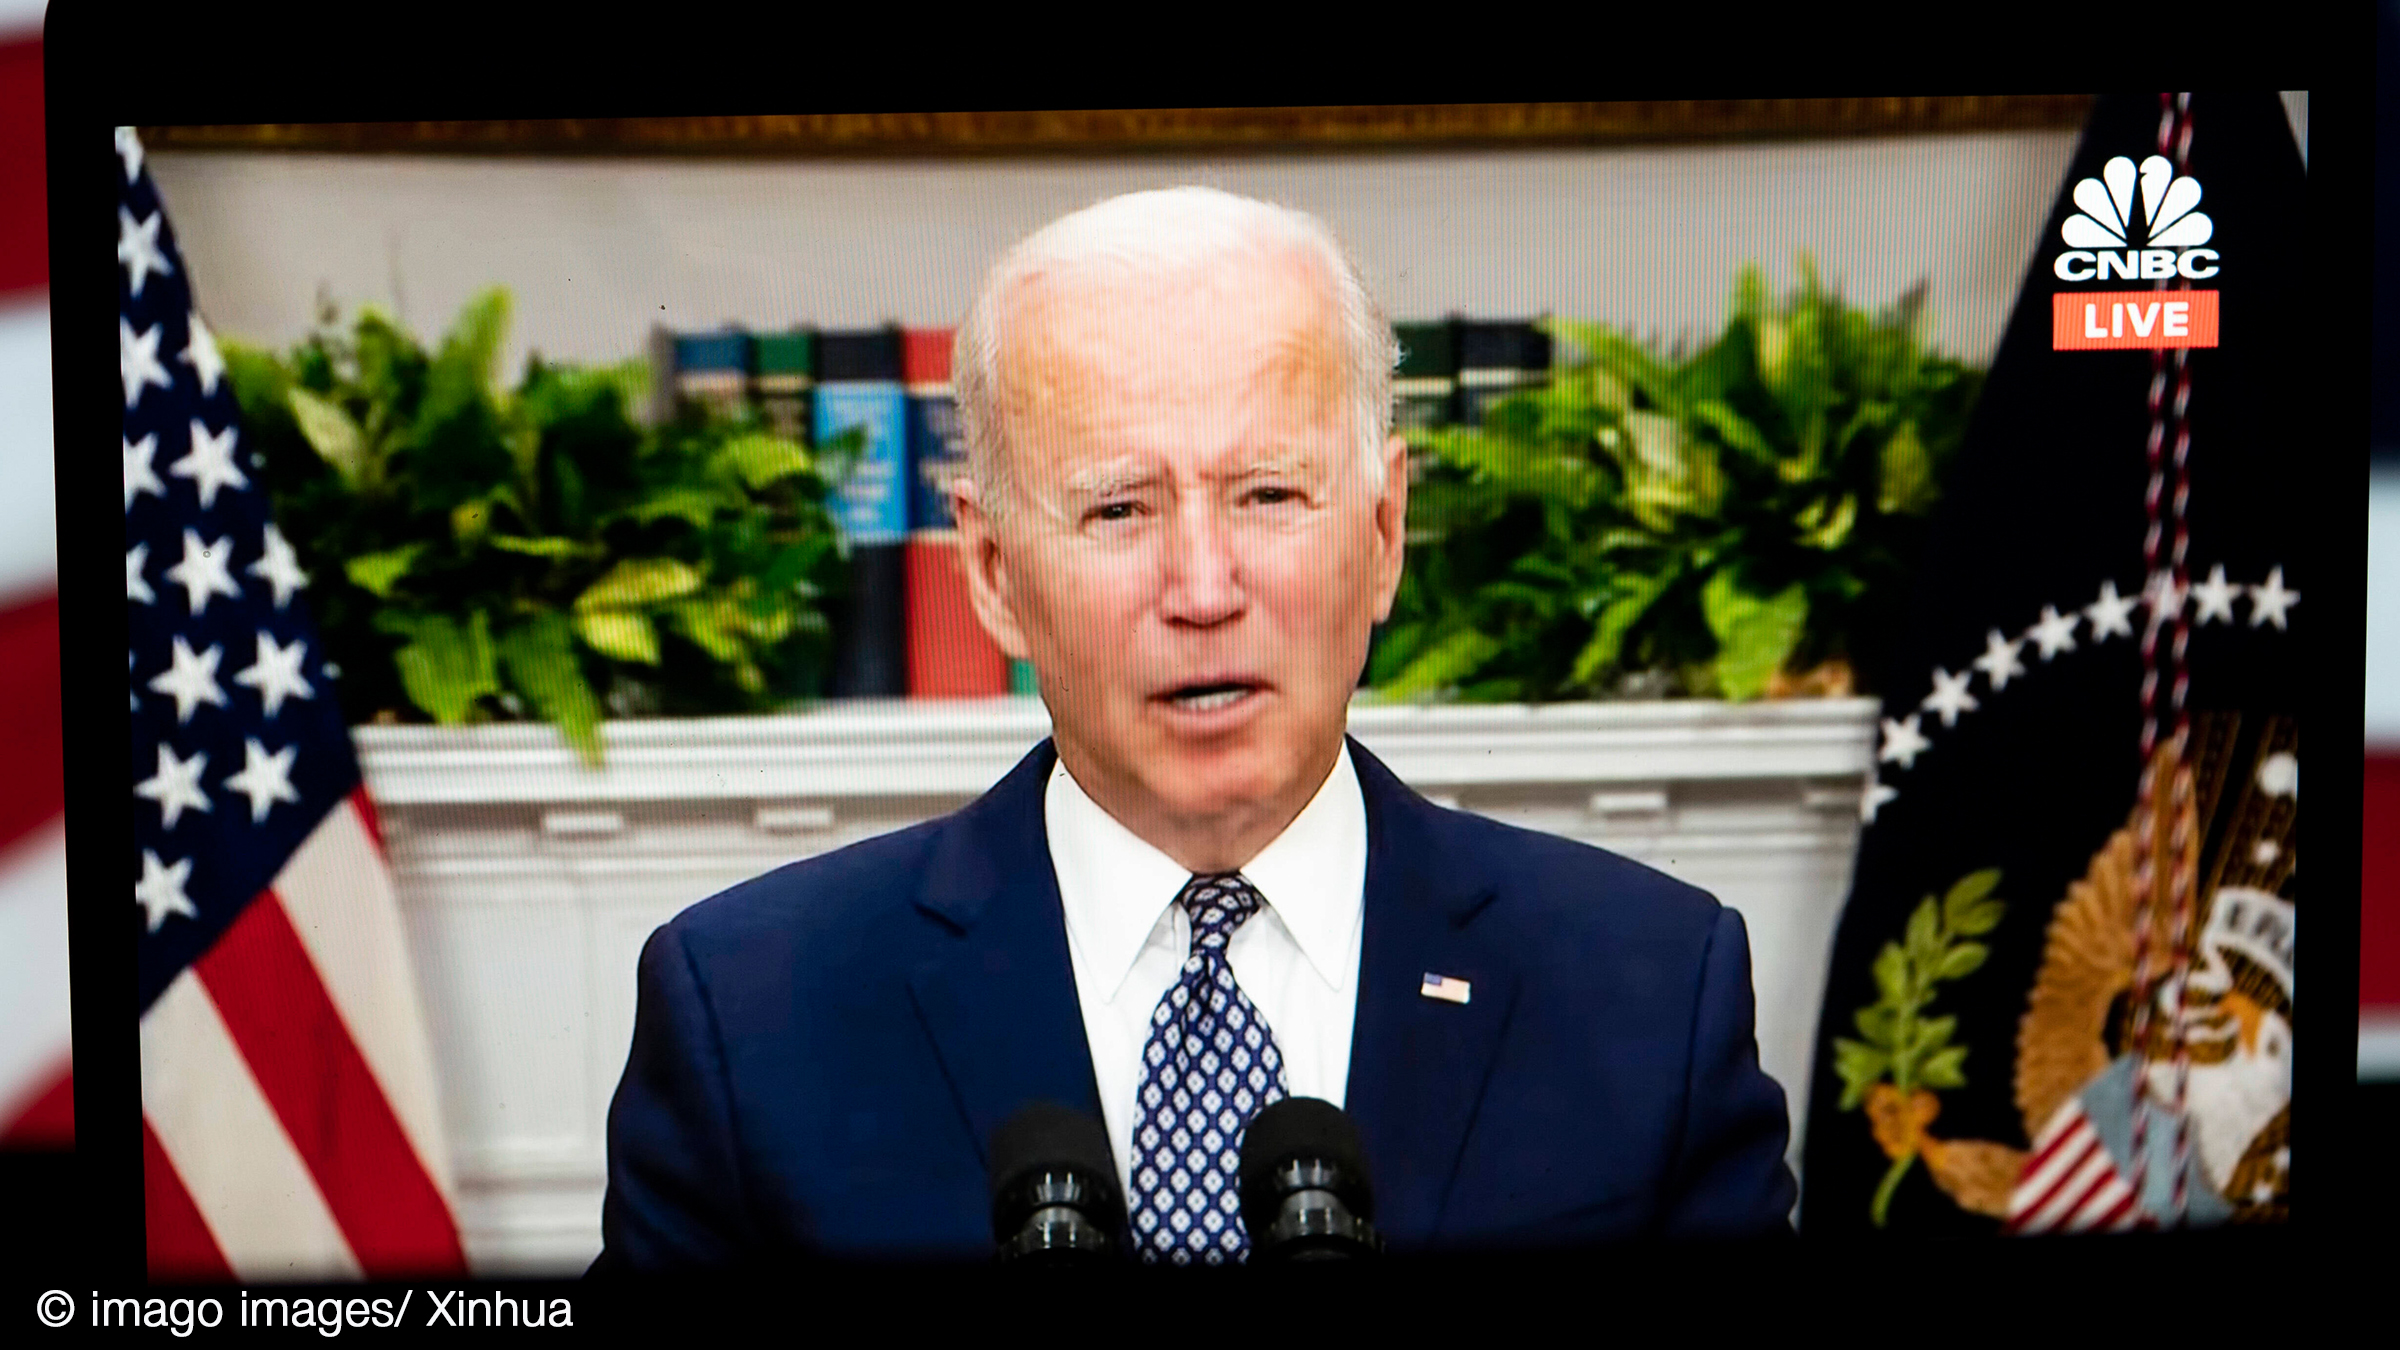 Screen photo shows the American President Joe Biden